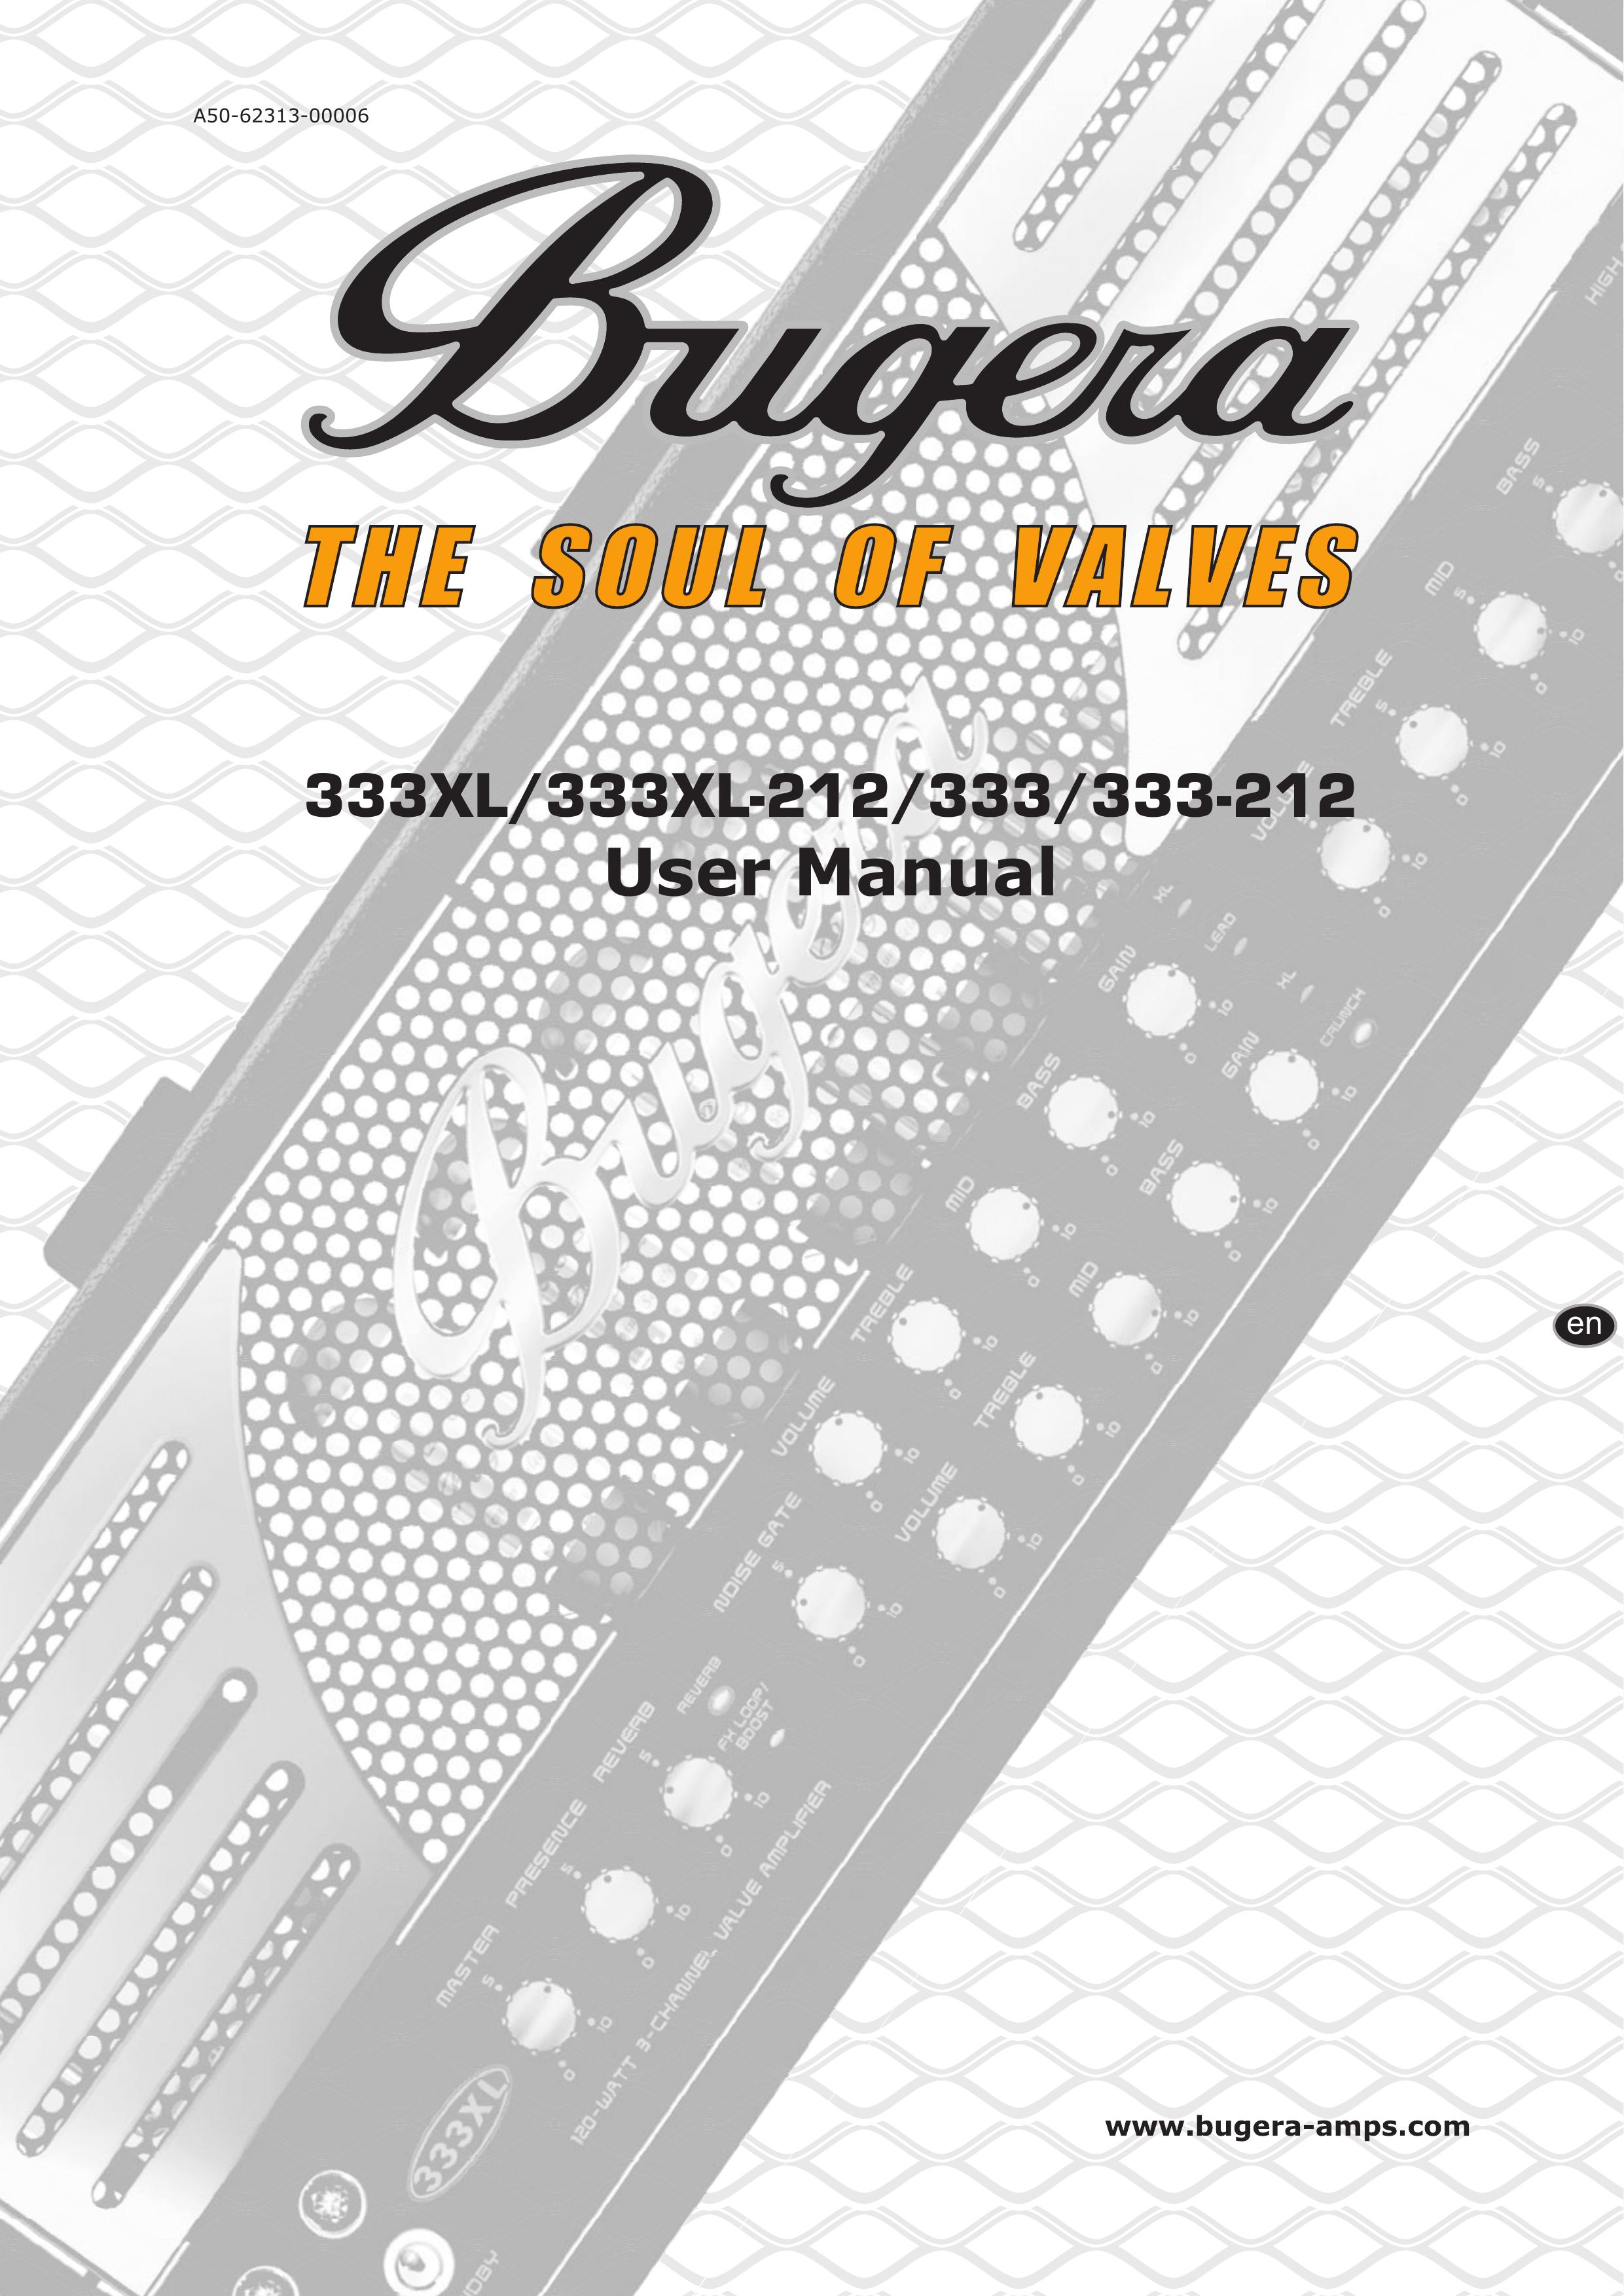 Behringer 333-212 Musical Instrument Amplifier User Manual